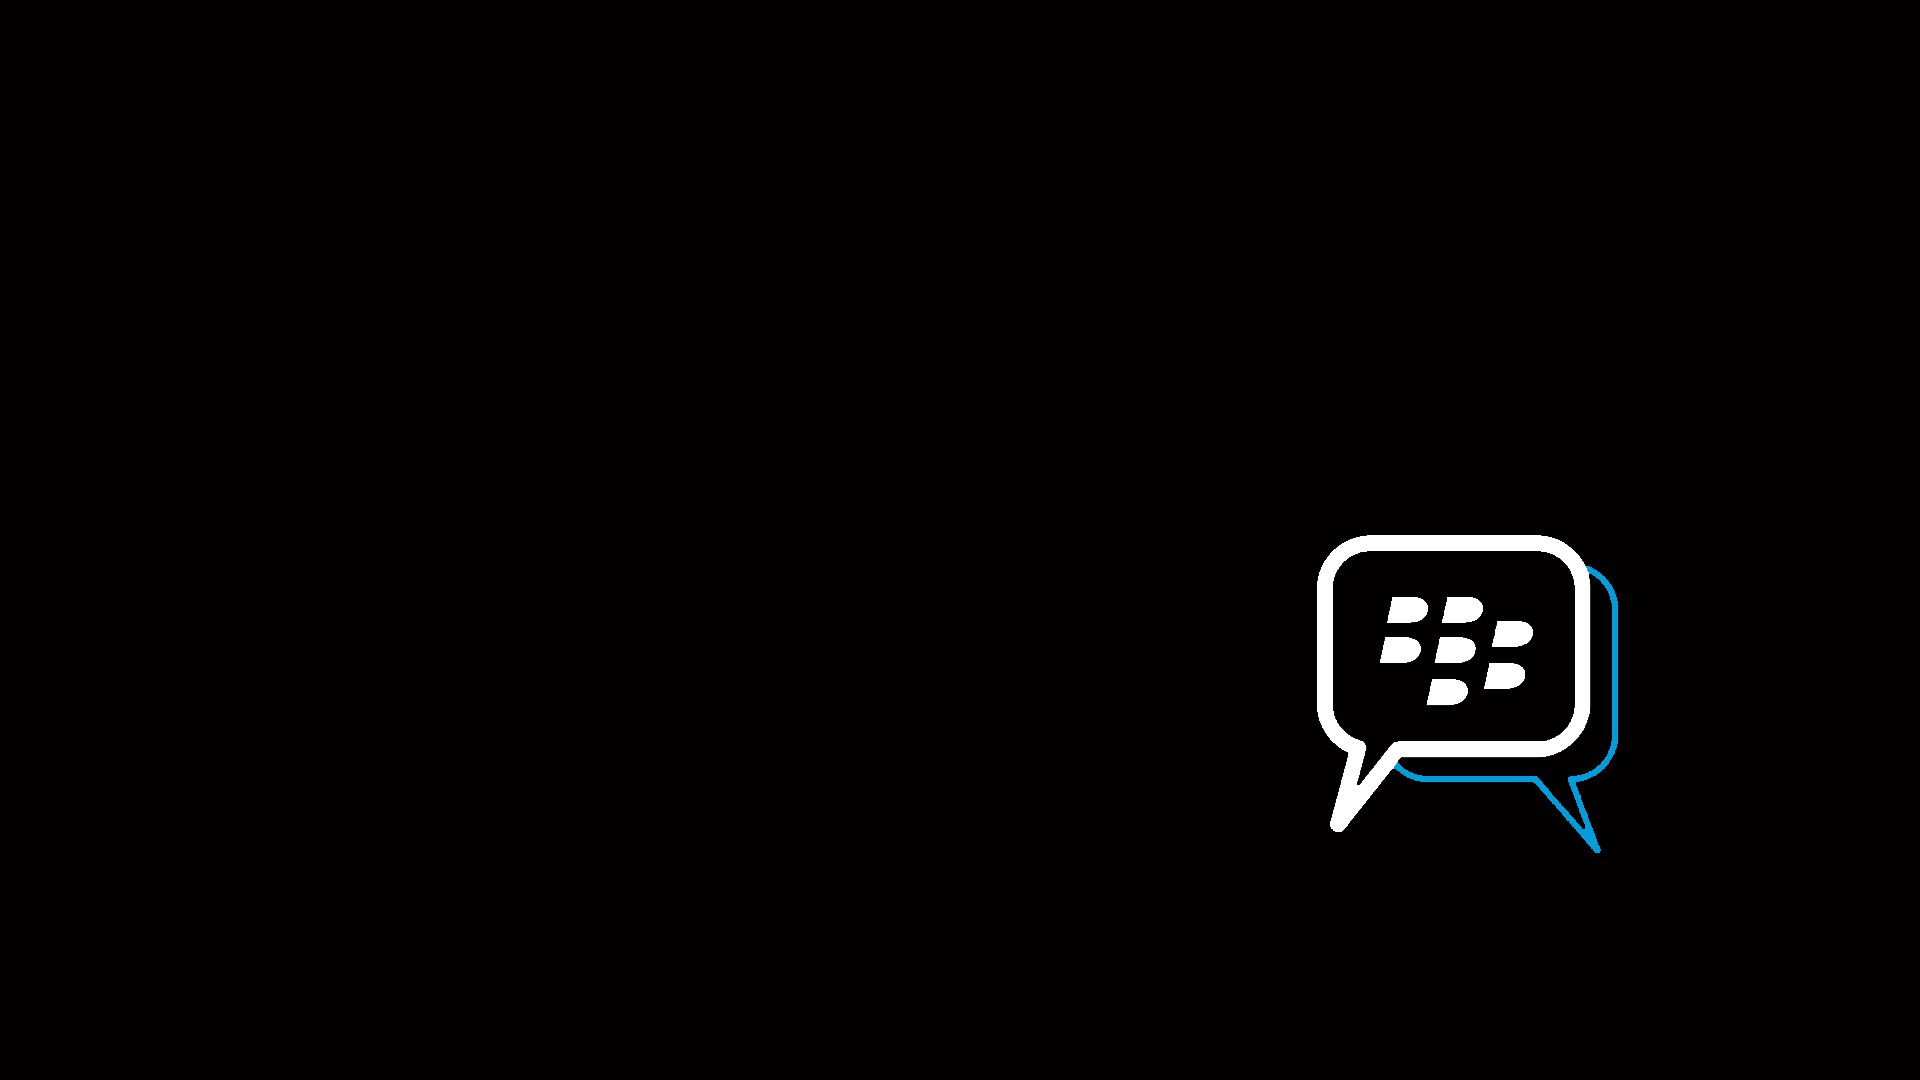 Blackberry Logo Wallpapers | Download Free Desktop Wallpaper ...